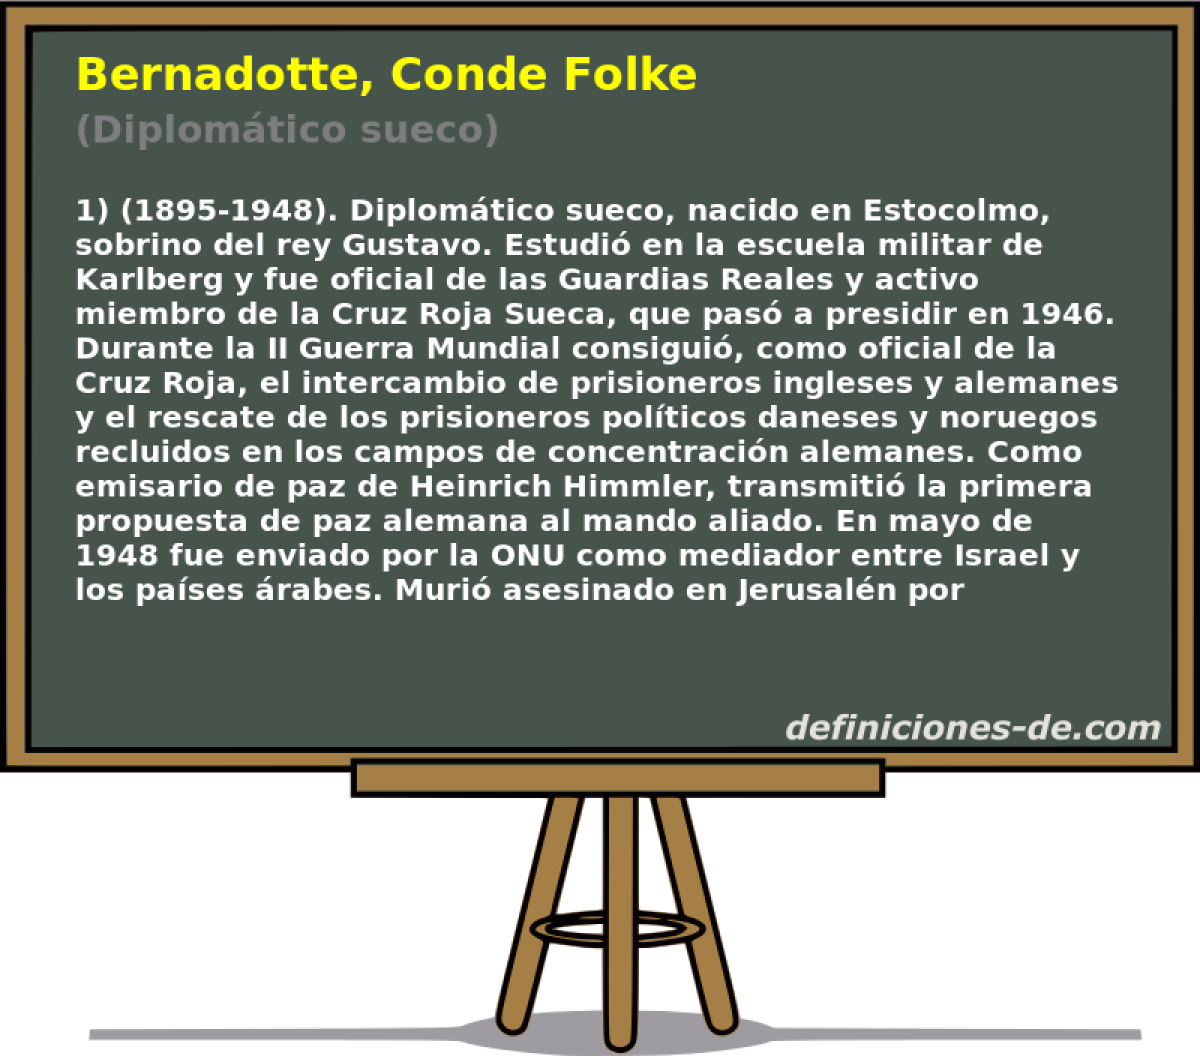 Bernadotte, Conde Folke (Diplomtico sueco)